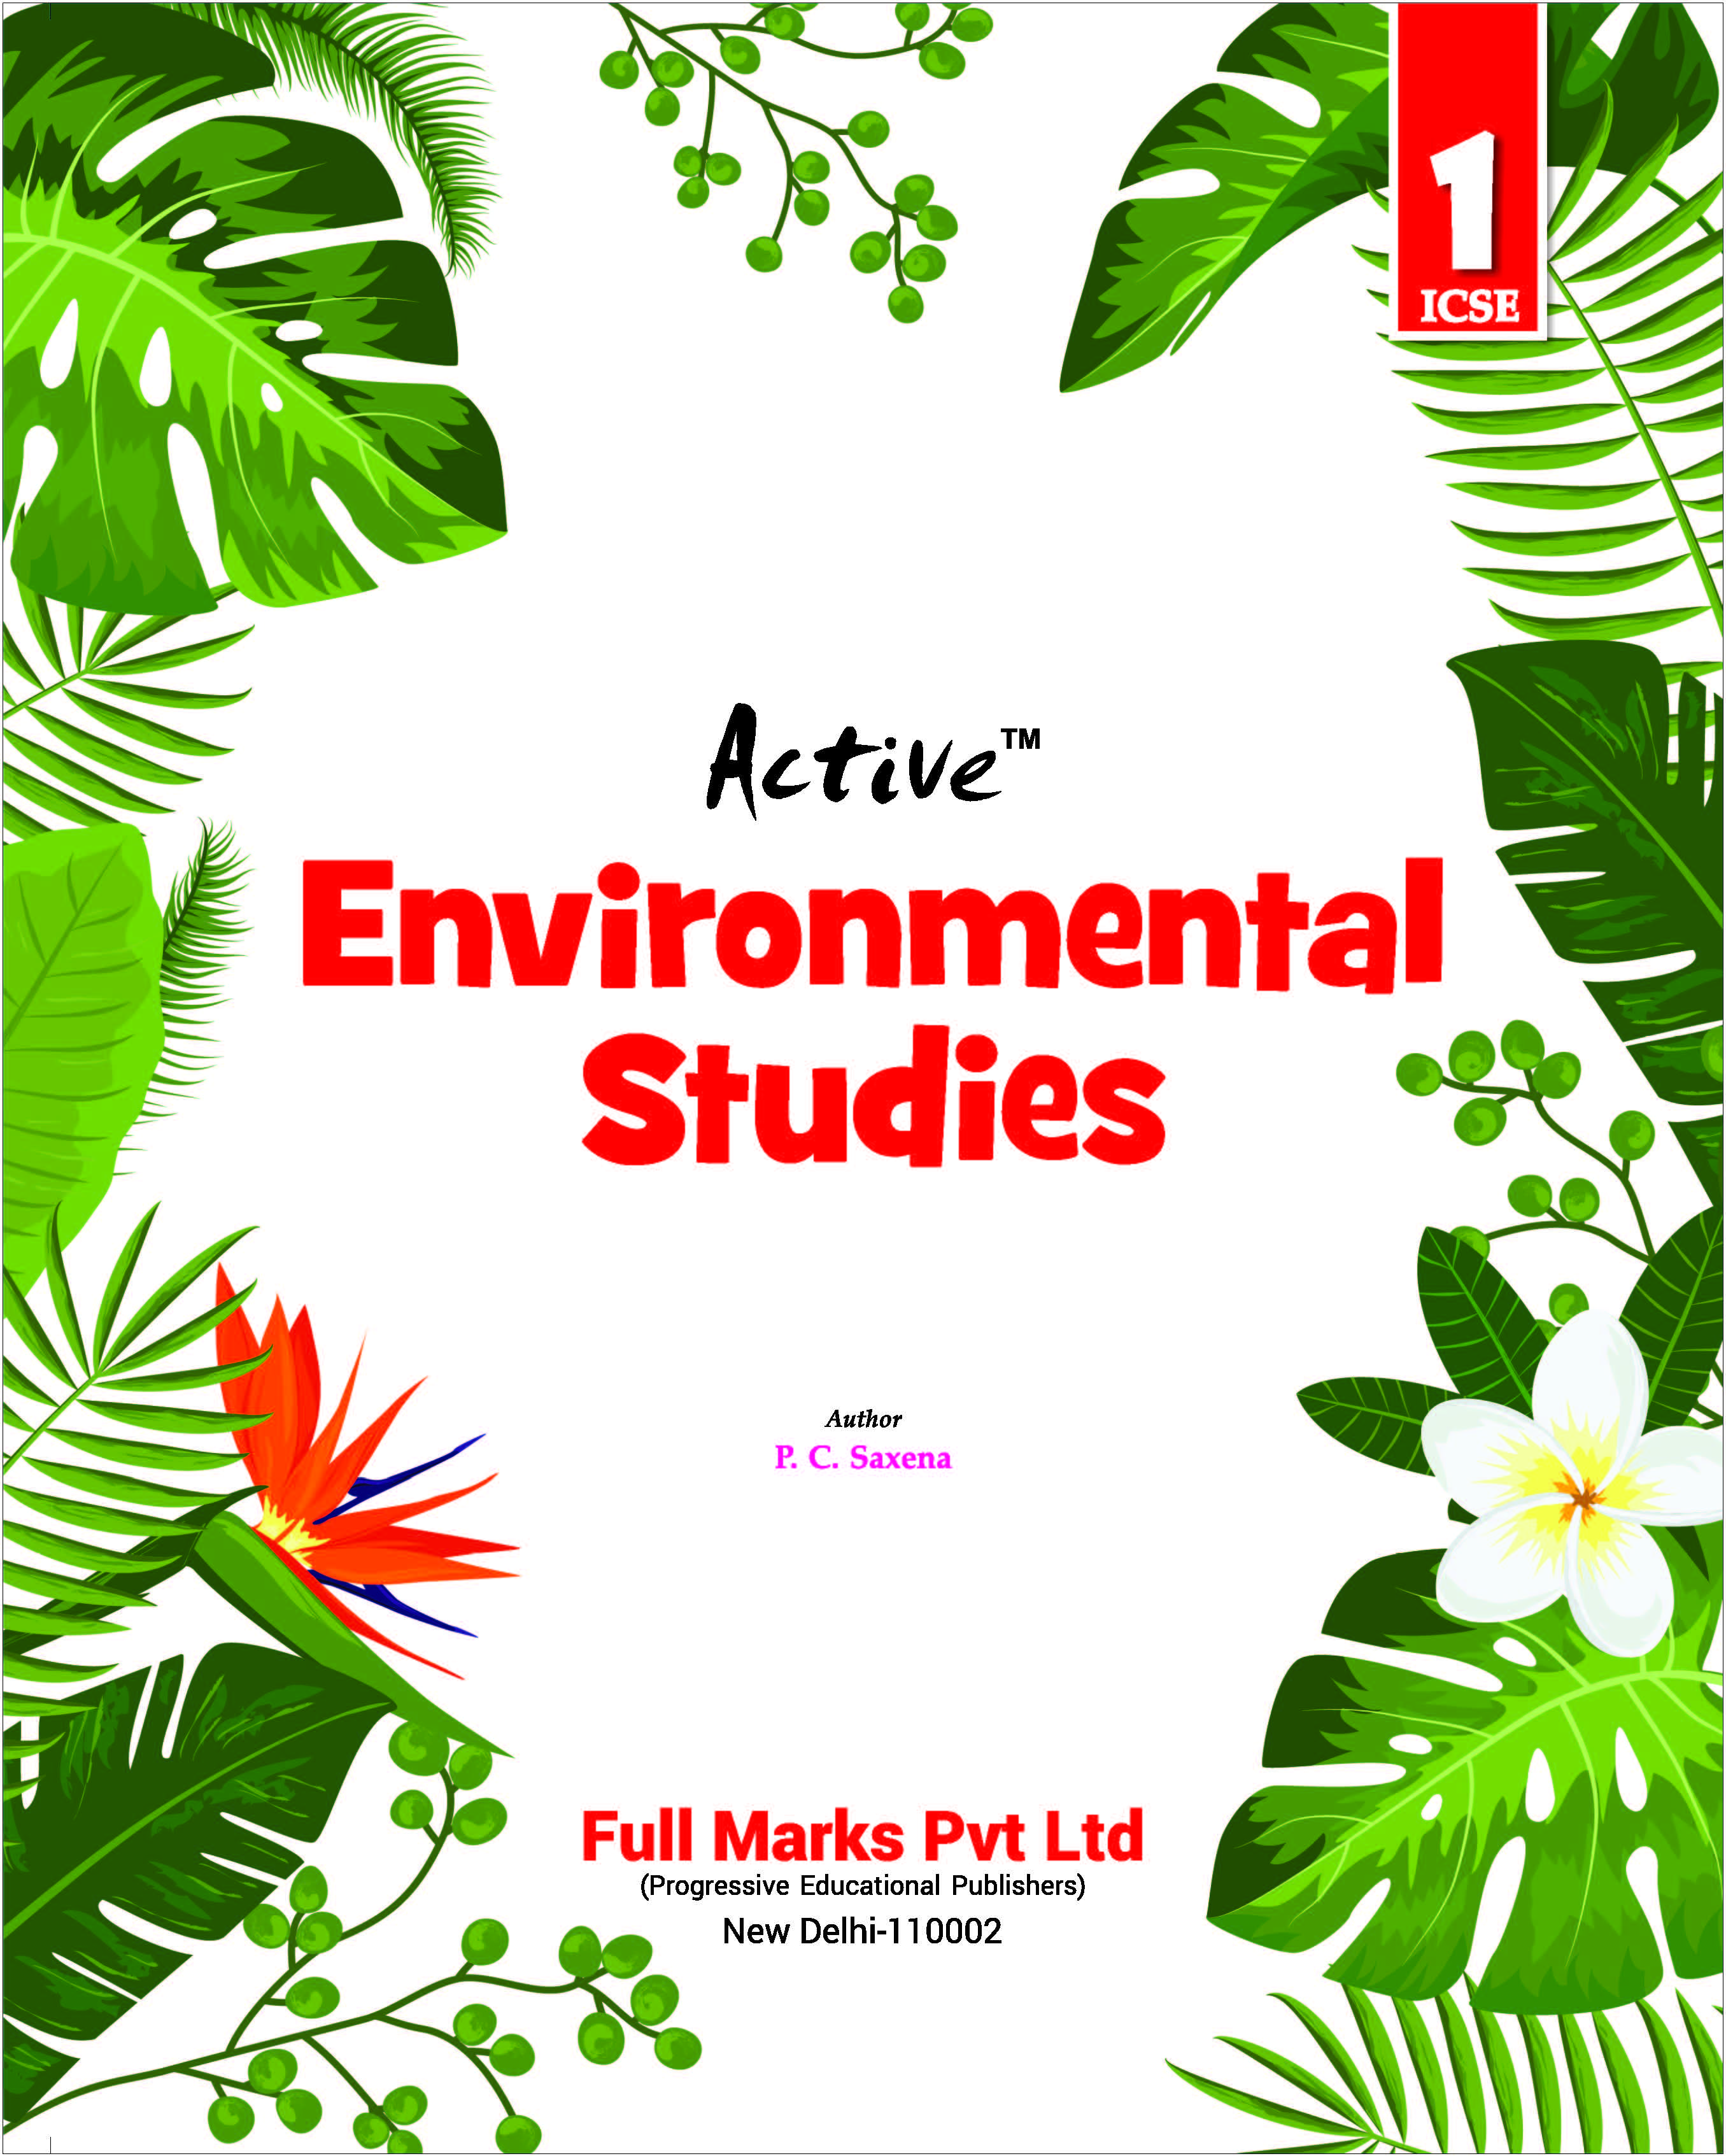 Active Environmental Studies (ICSE Board) Class 1